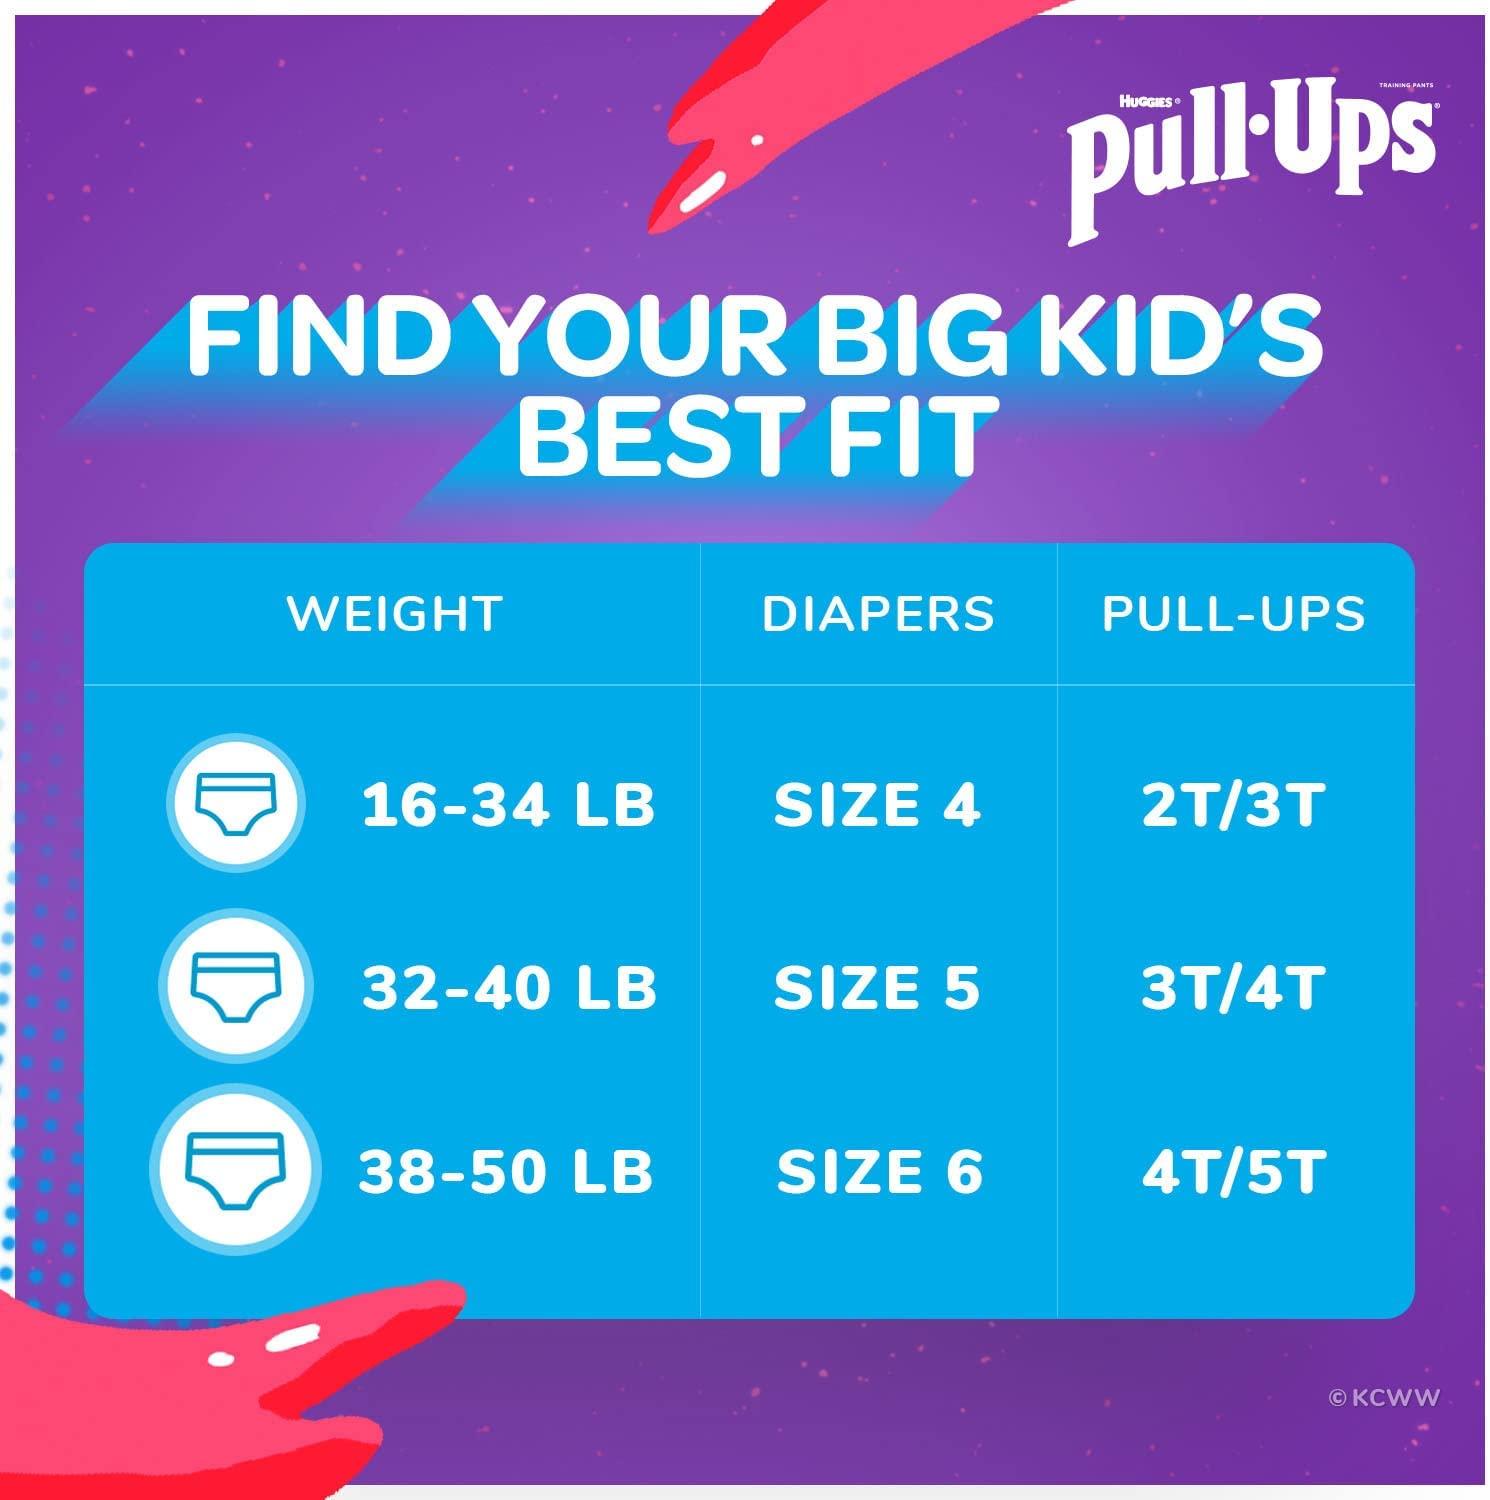  Pull-Ups Boys' Night-Time Potty Training Pants, Training  Underwear, 3T-4T (32-40 lbs), 60 Ct : Baby